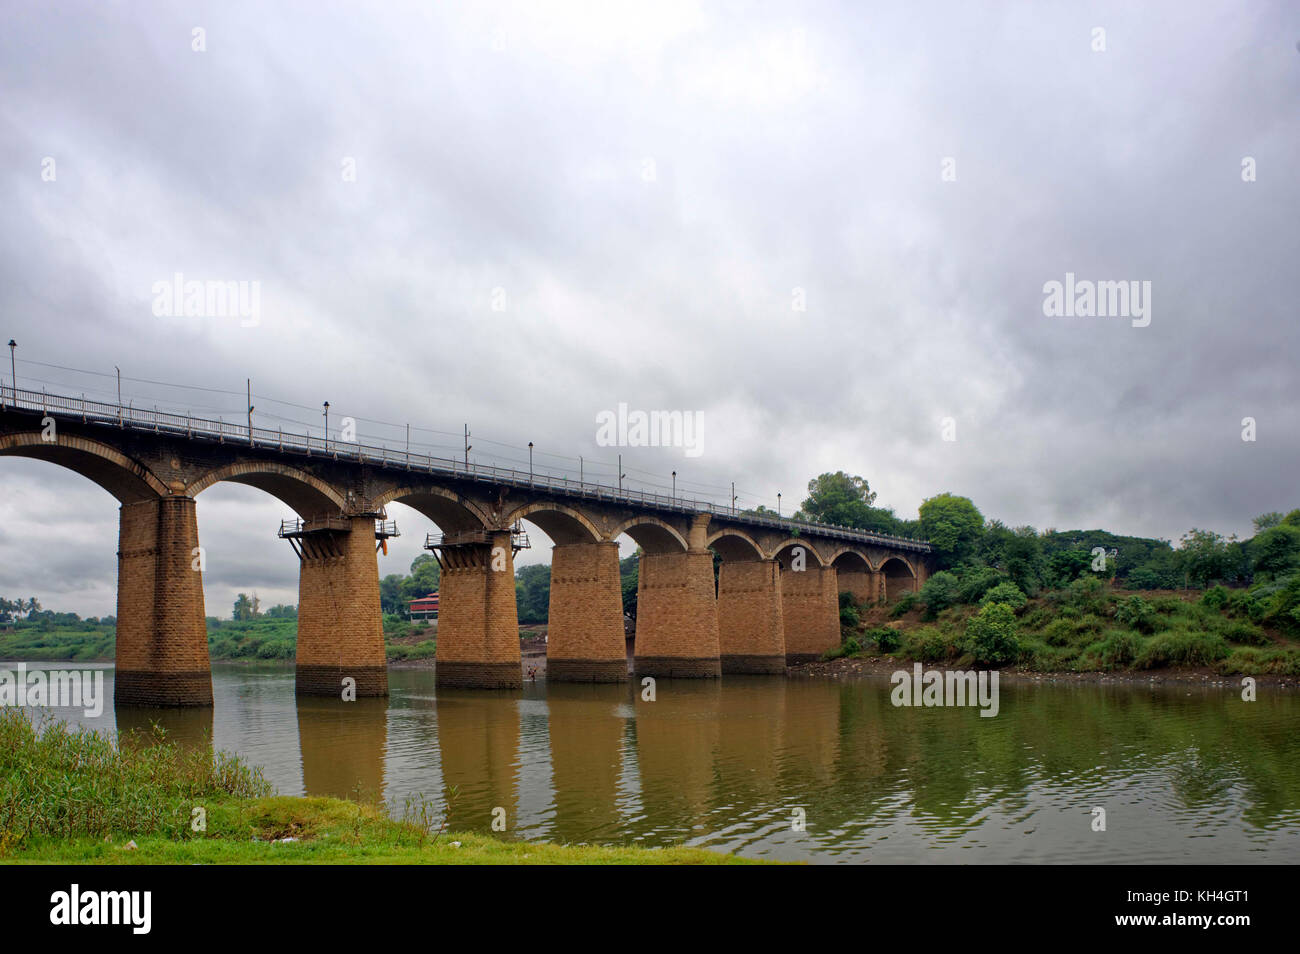 Irwin bridge on Krishna river, sangli, Maharashtra, India, Asia - stp 259643 Stock Photo